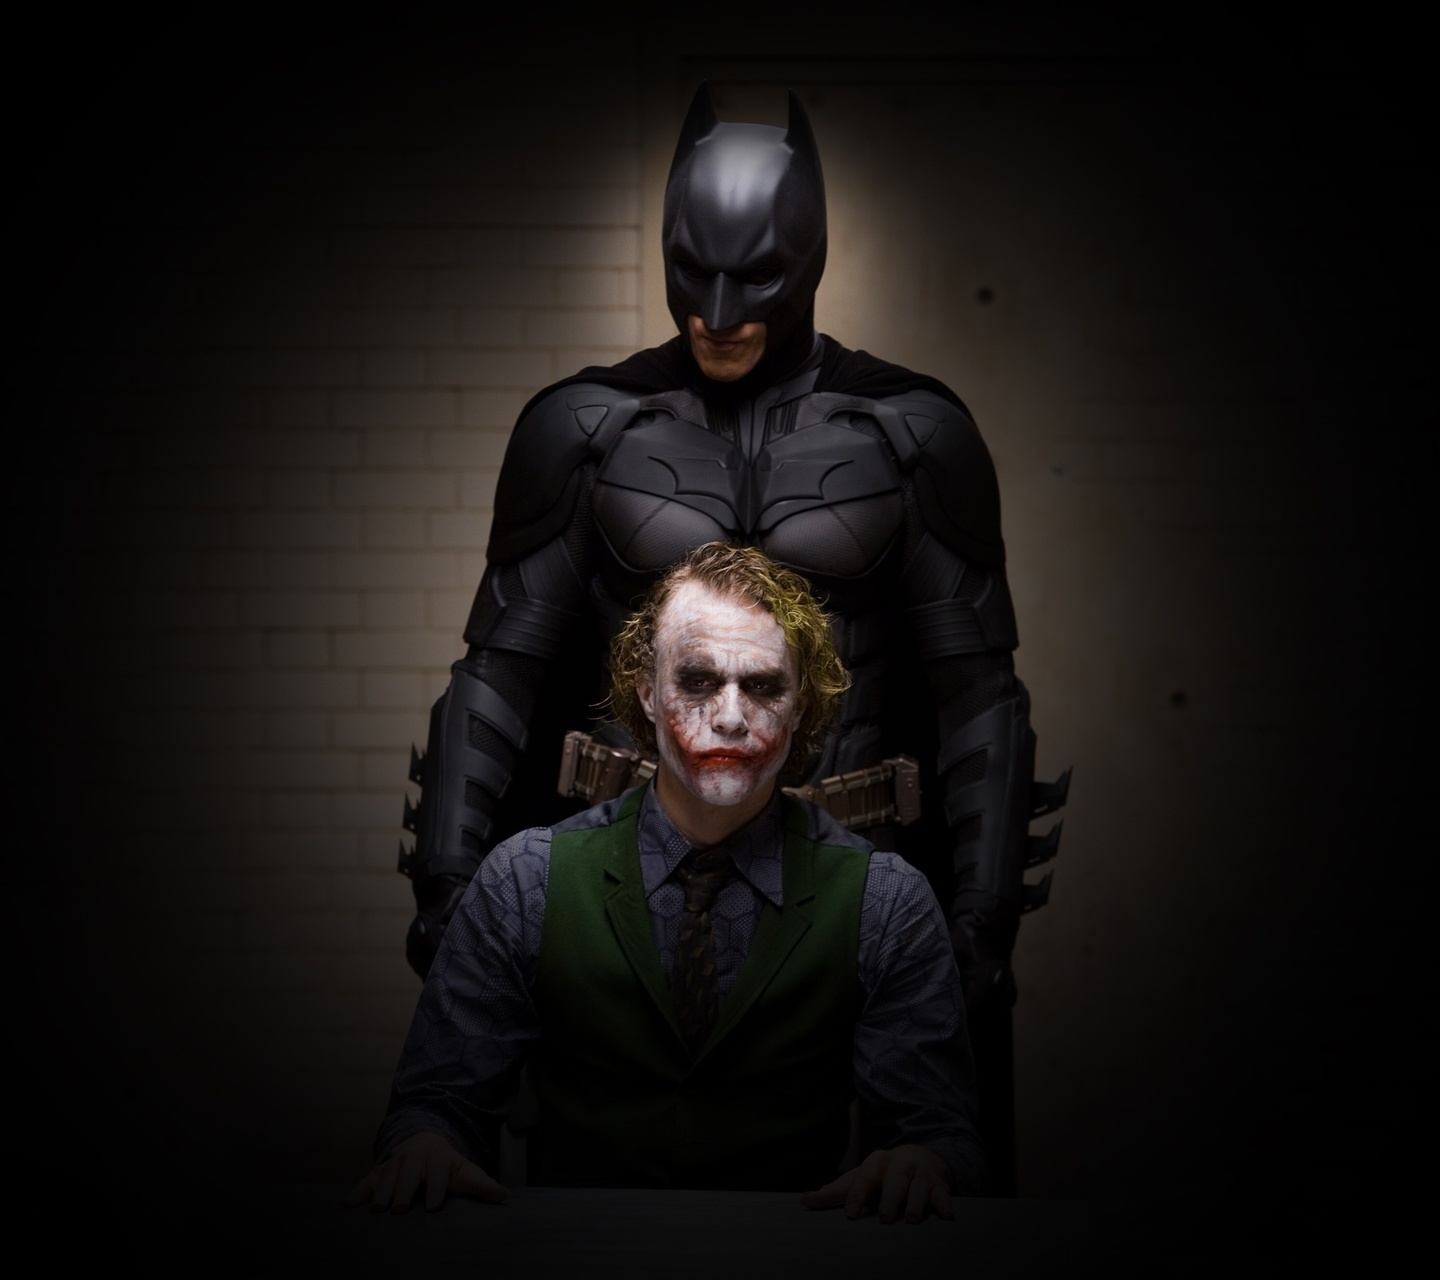 Joker Vs Batman Wallpaper HD Wallpapers on picsfaircom 1440x1280